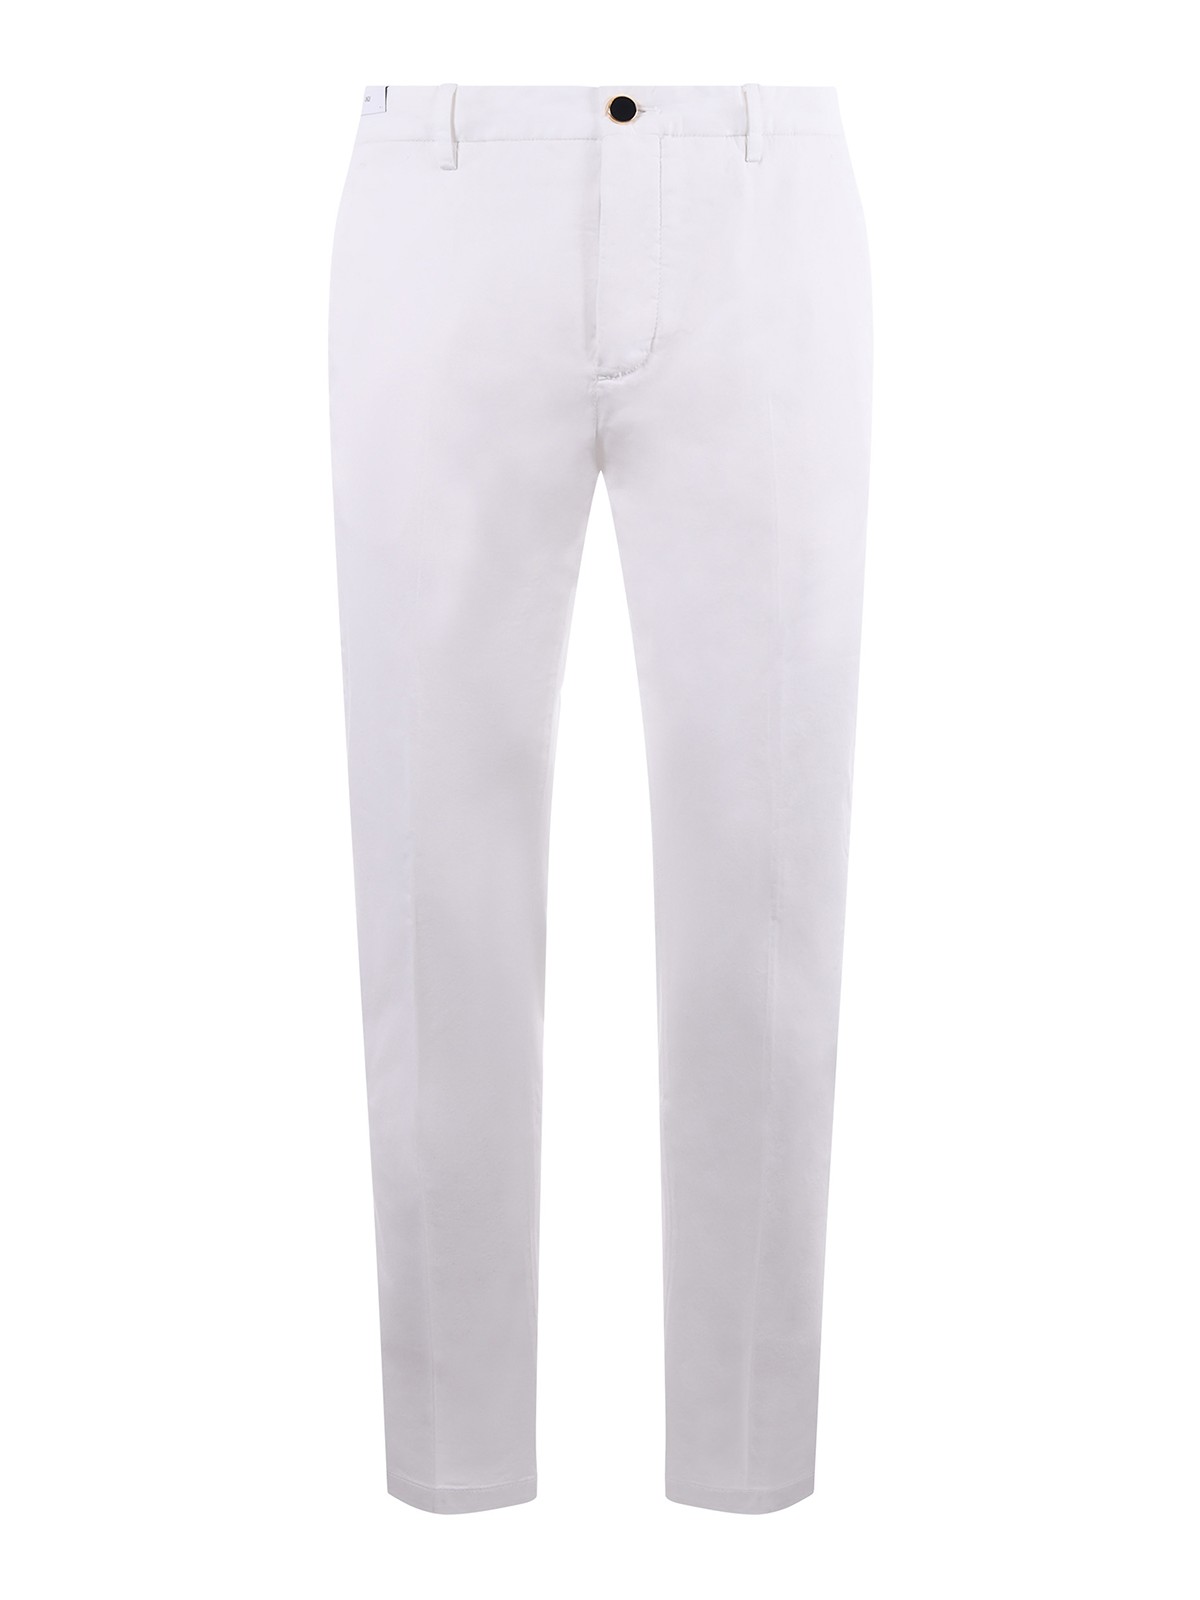 Pt Torino Pt Trousers In White